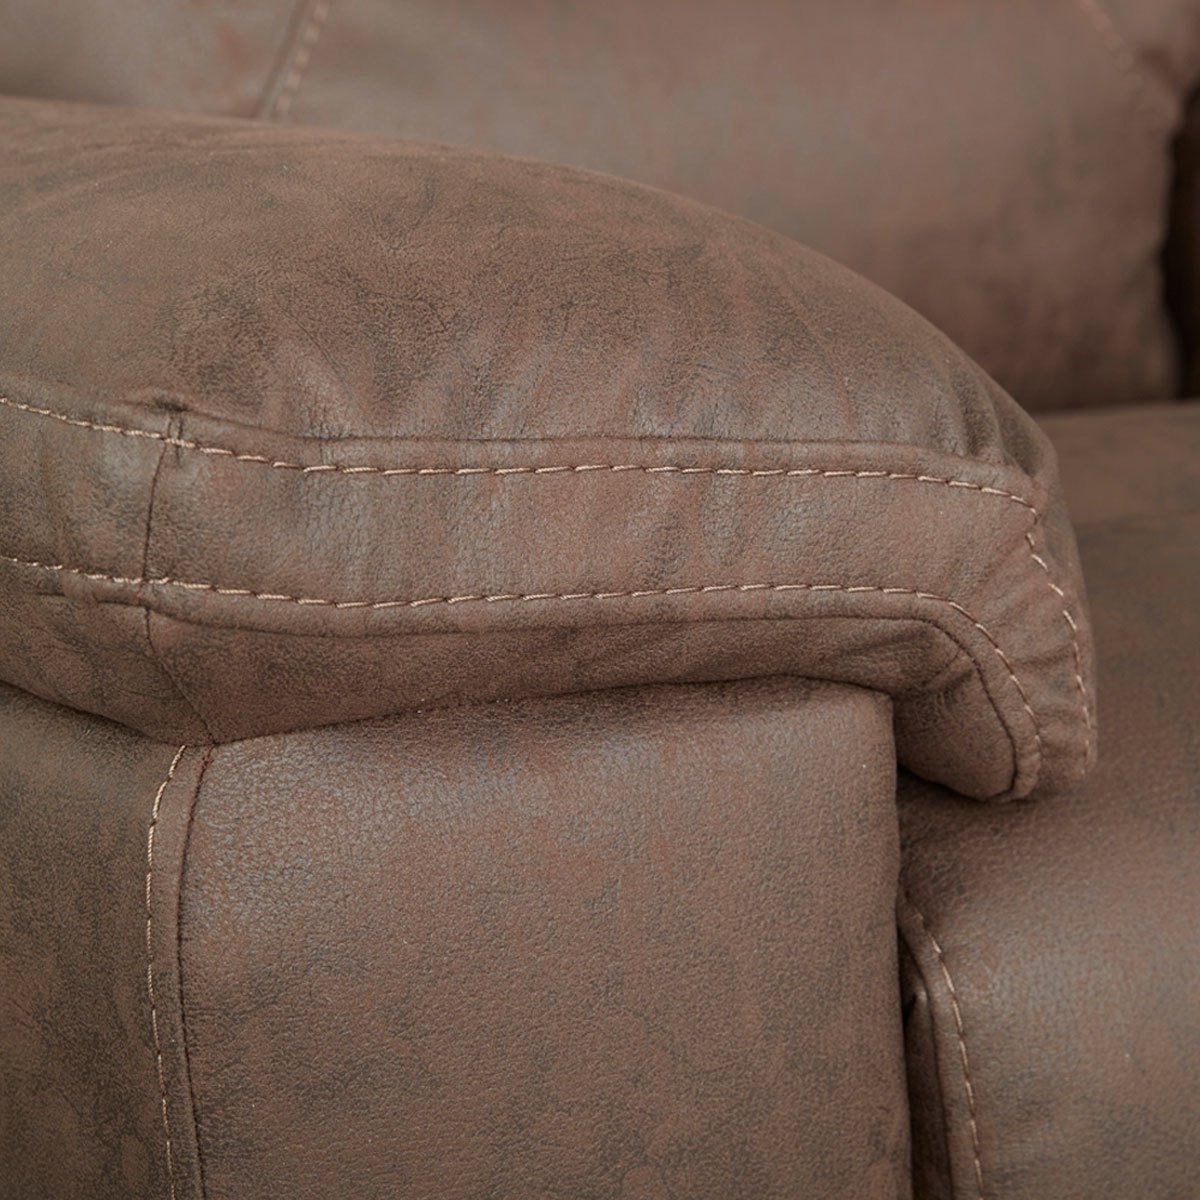 Kuka Justin Brown Fabric Power Reclining 2 Seater Sofa - Signature Retail Stores